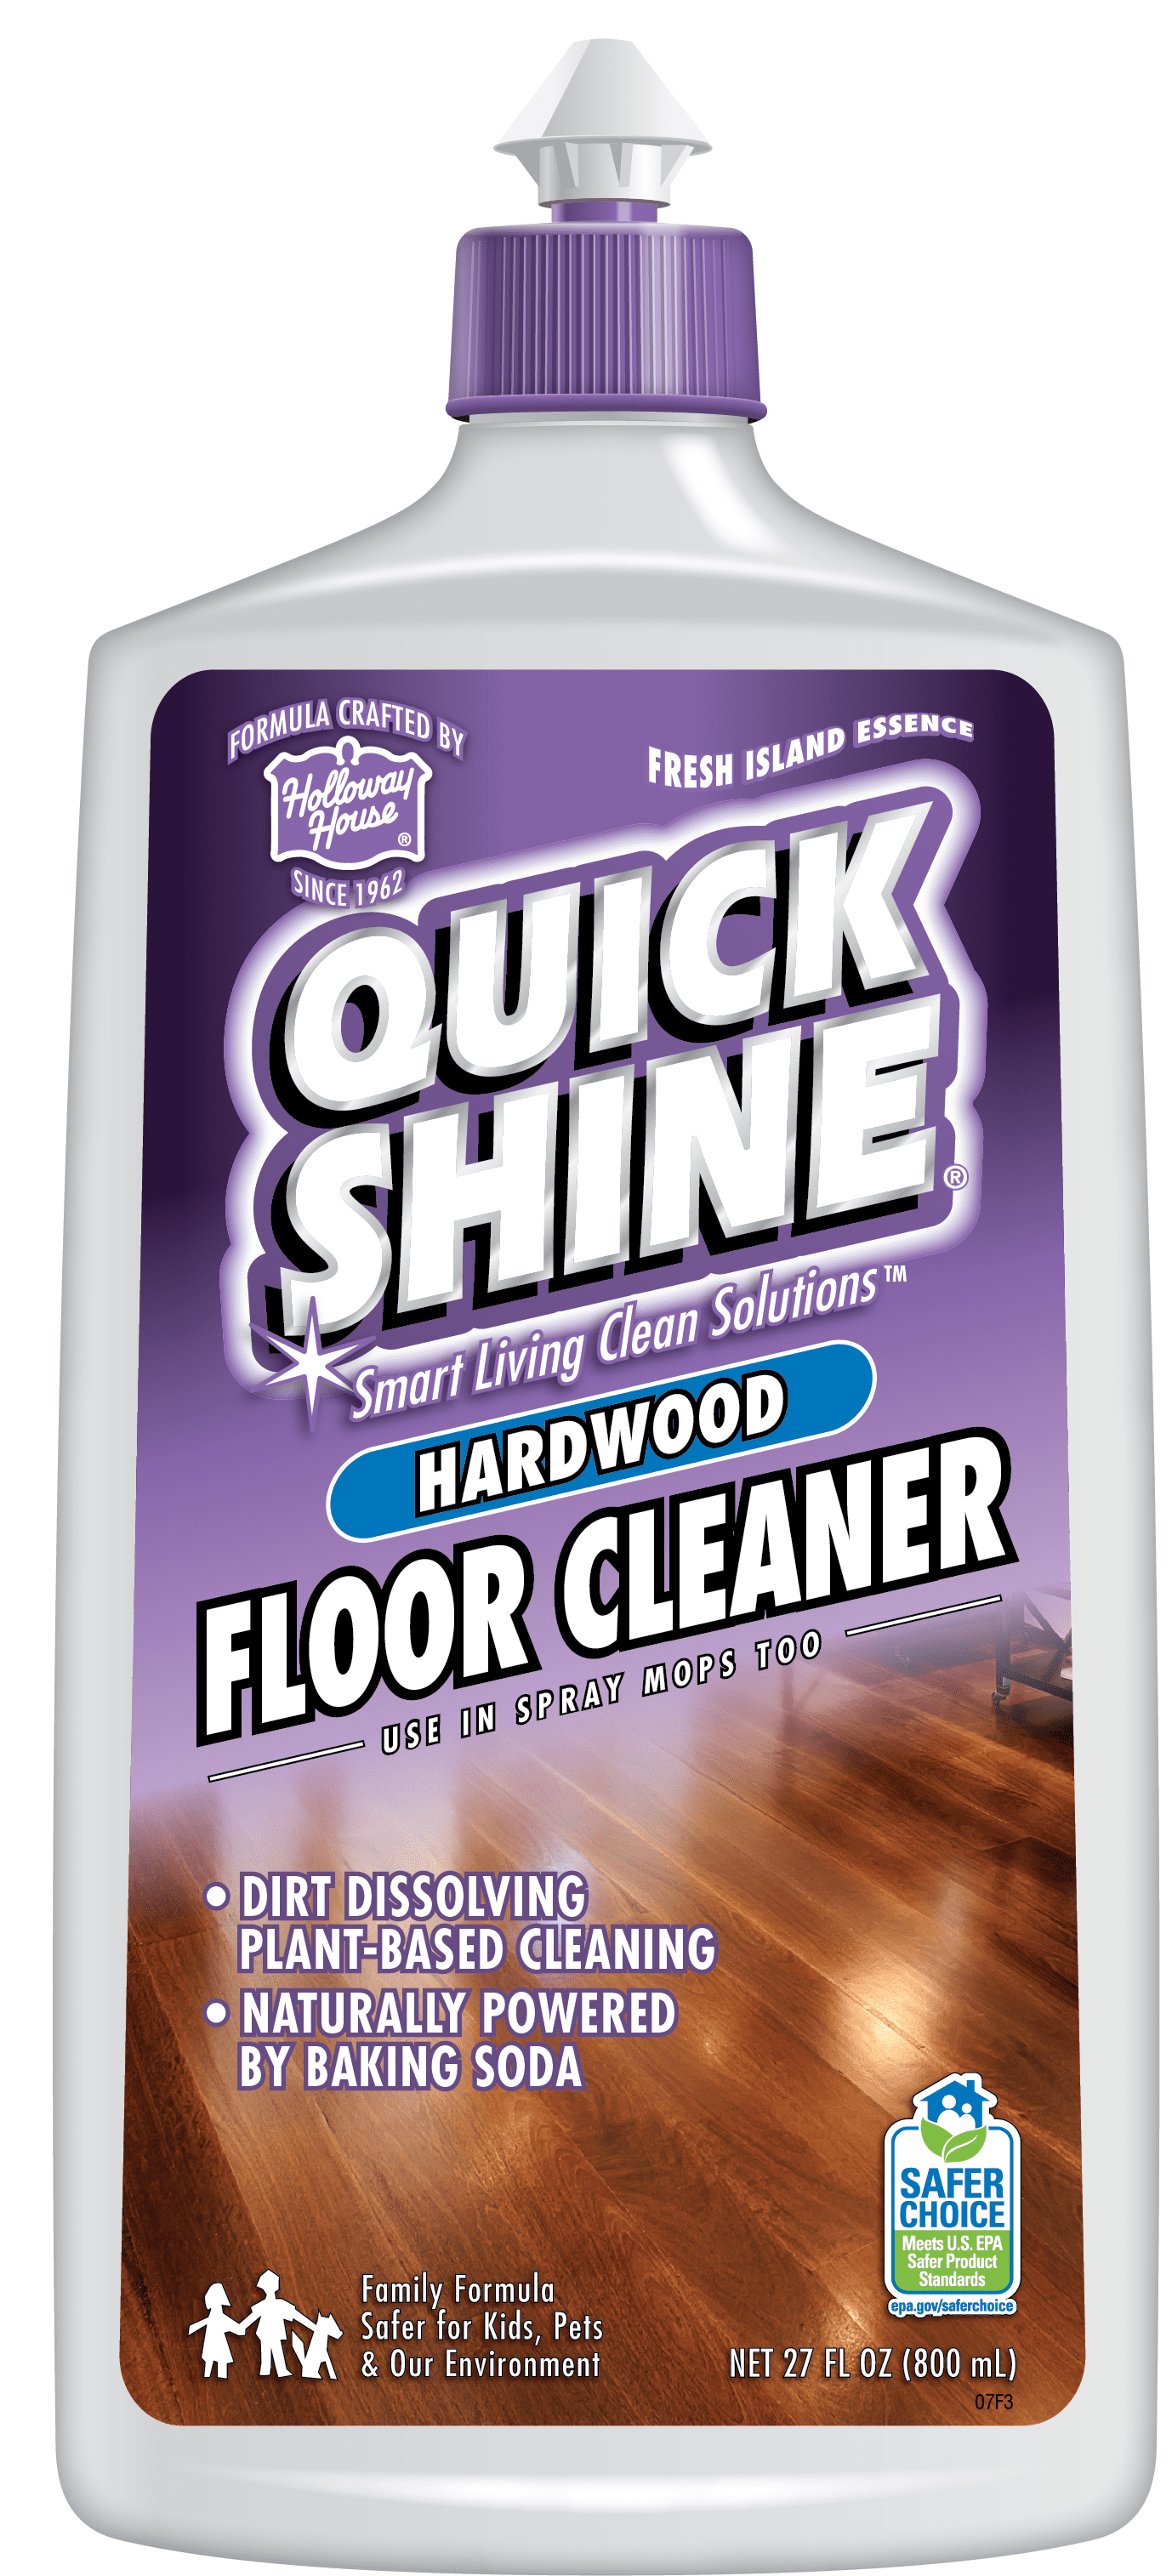 Traffic Hardwood Floor Cleaner, How Do You Clean And Shine Hardwood Floors